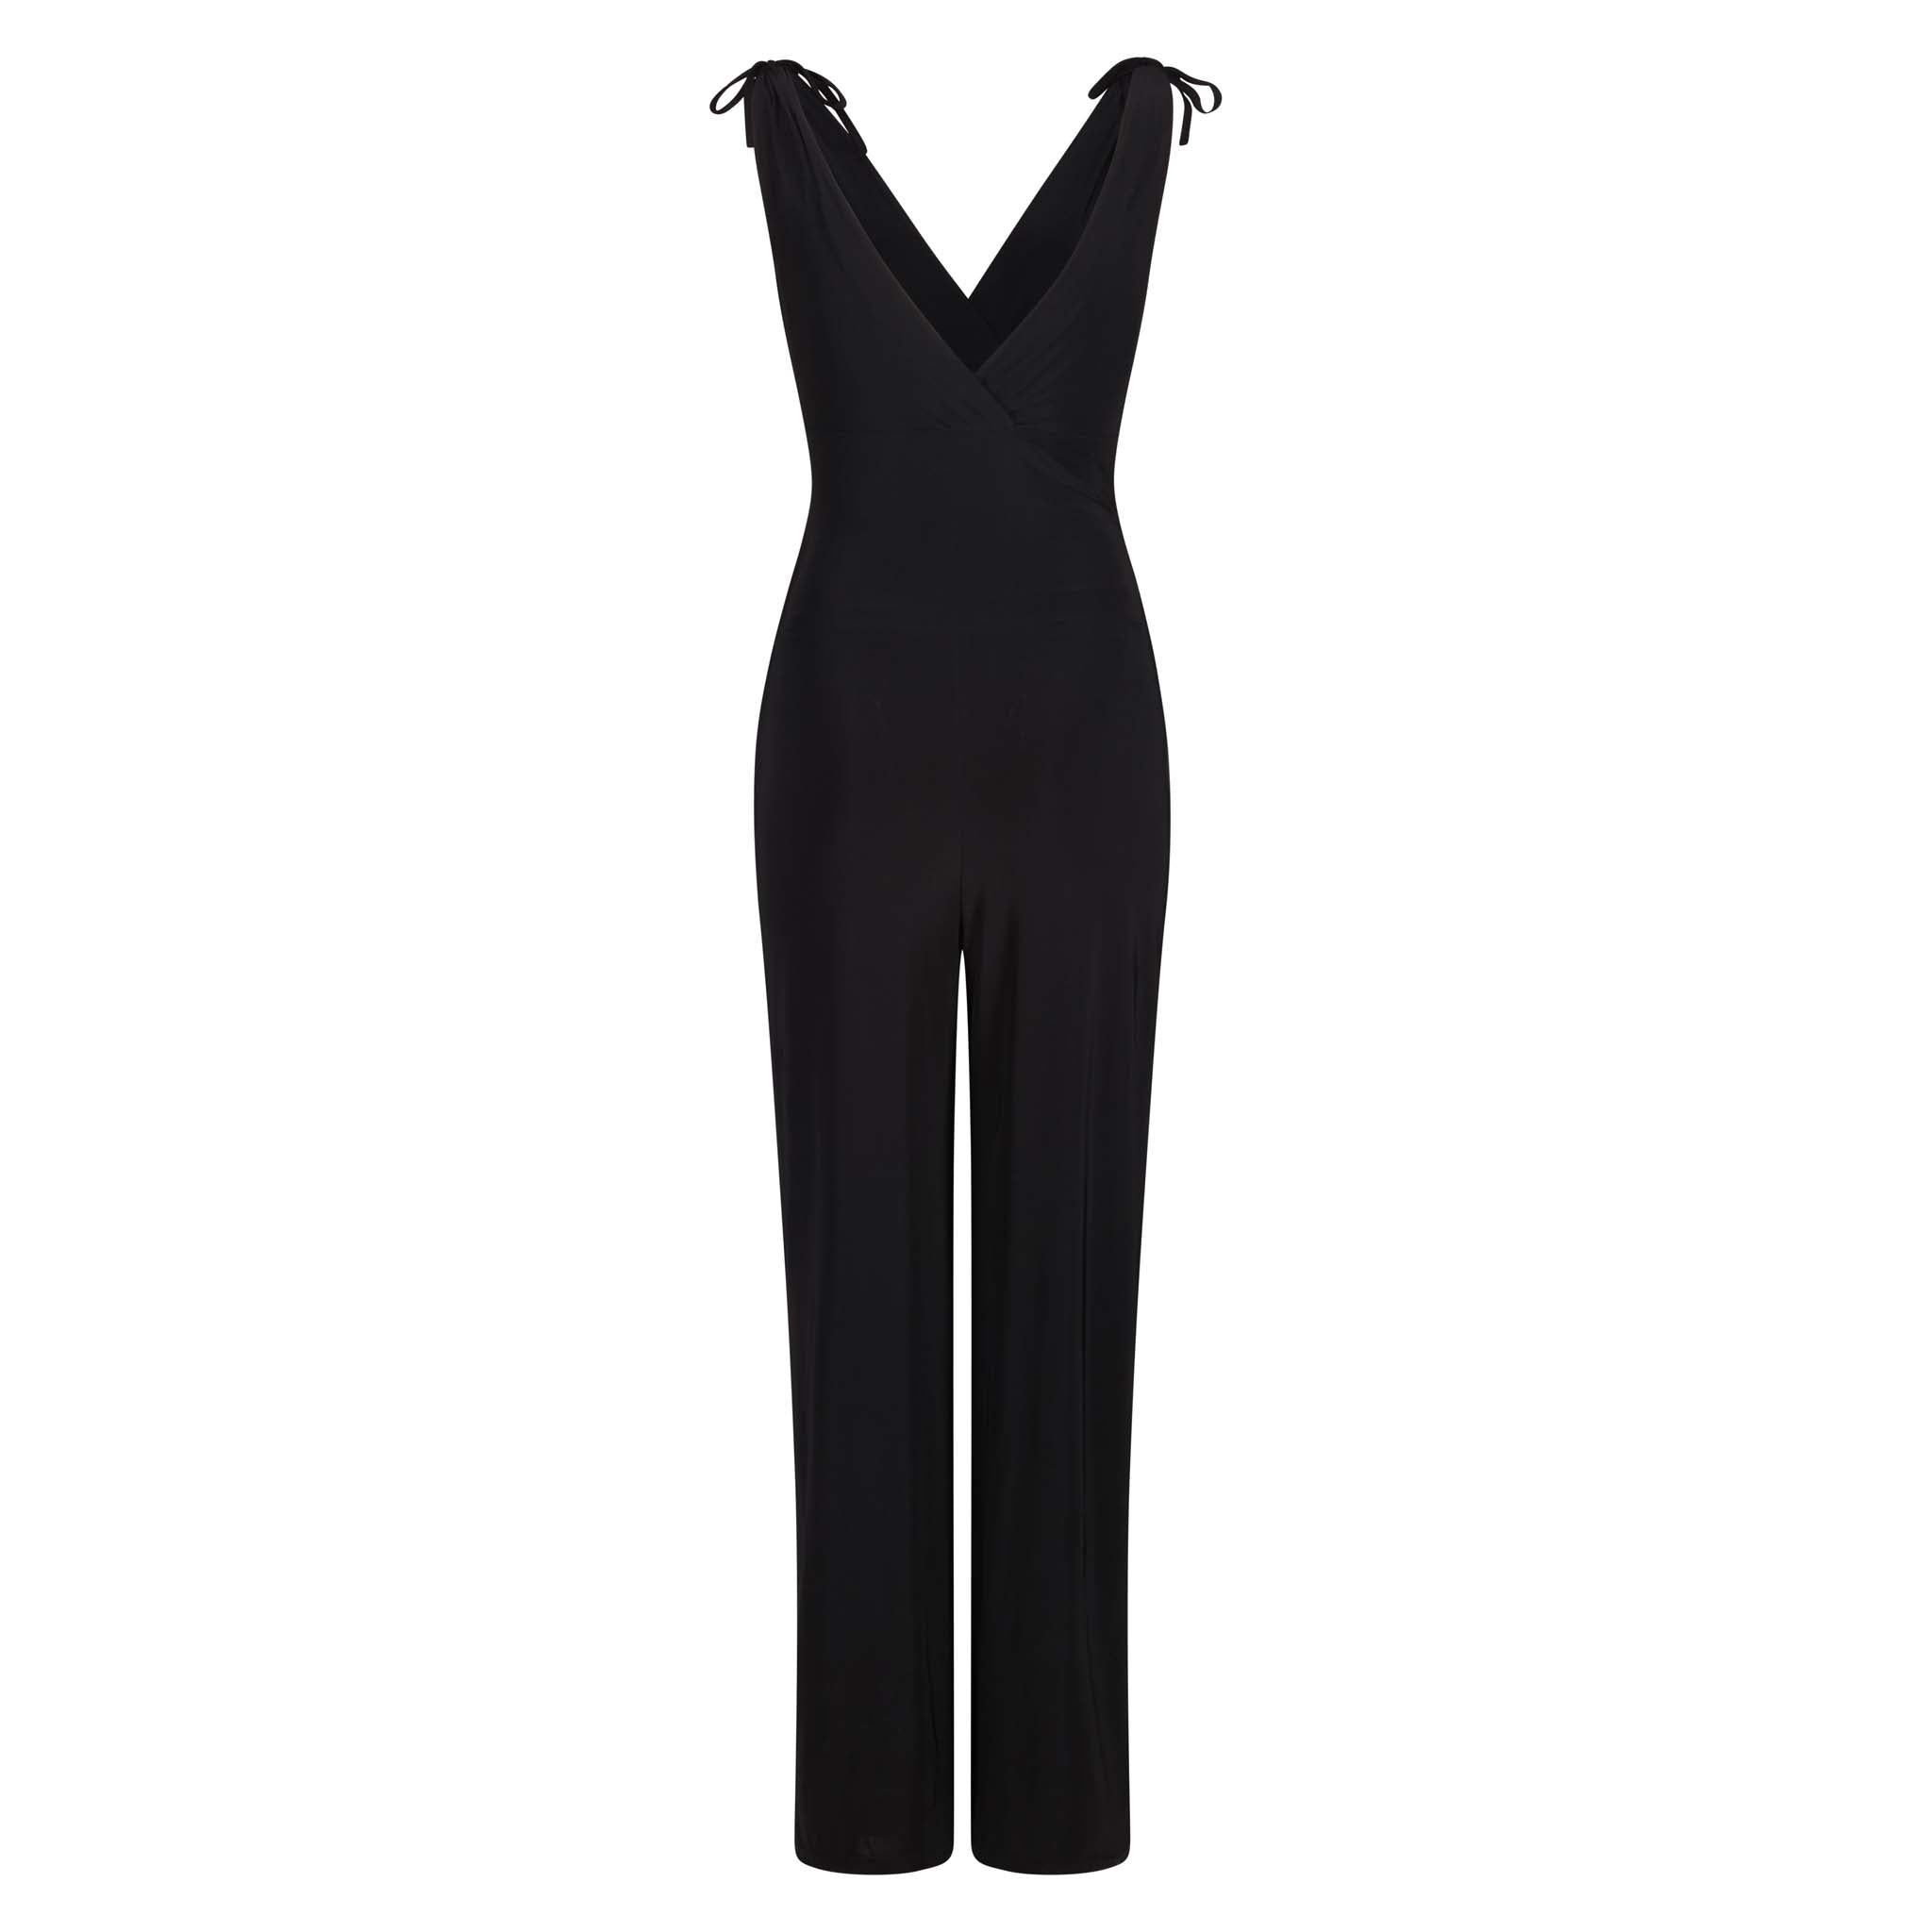 SK Jumpsuit  Our Peyton Jumpsuit in Black  Tiger Mist  Fashion nova  outfits Beachwear fashion Fashion